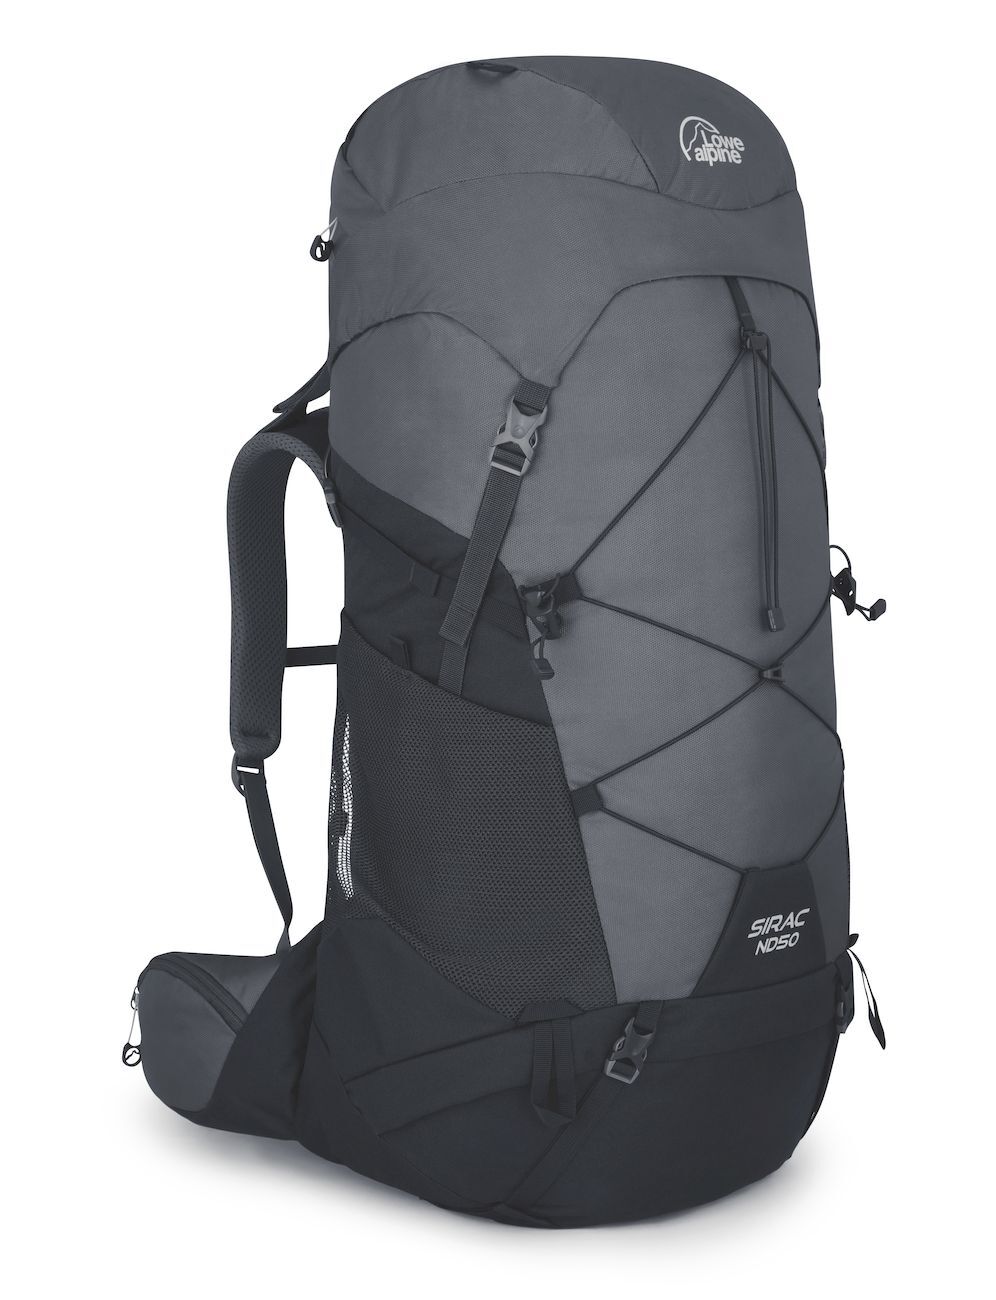 Lowe Alpine Sirac ND50 - Walking backpack - Women's